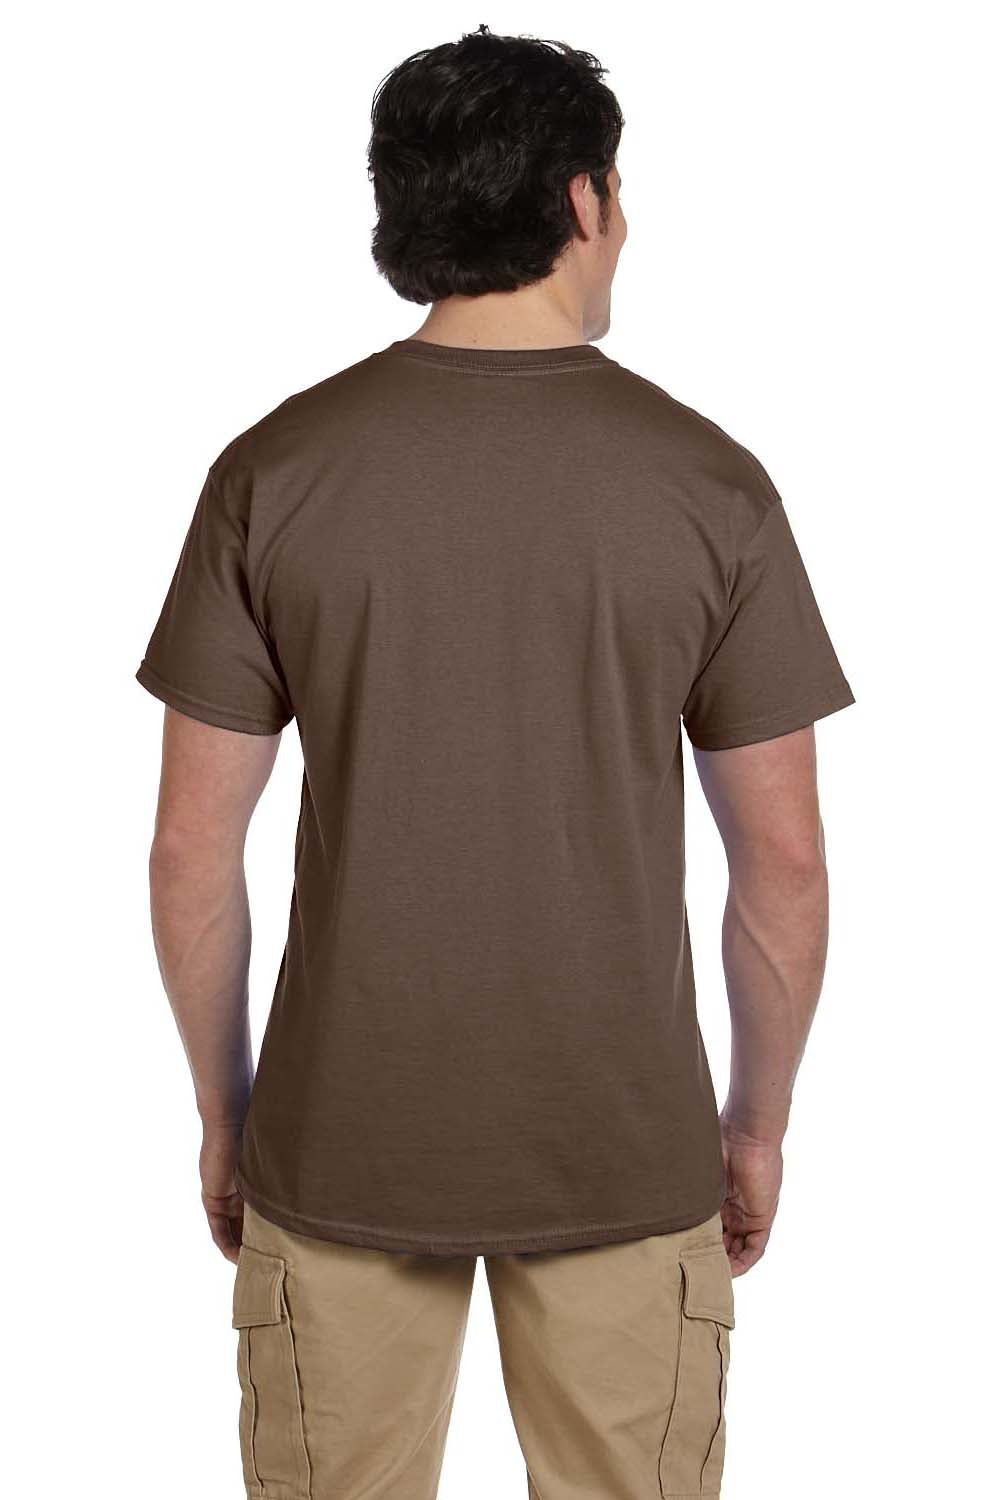 Hanes 5170 Mens EcoSmart Short Sleeve Crewneck T-Shirt Heather Brown Back